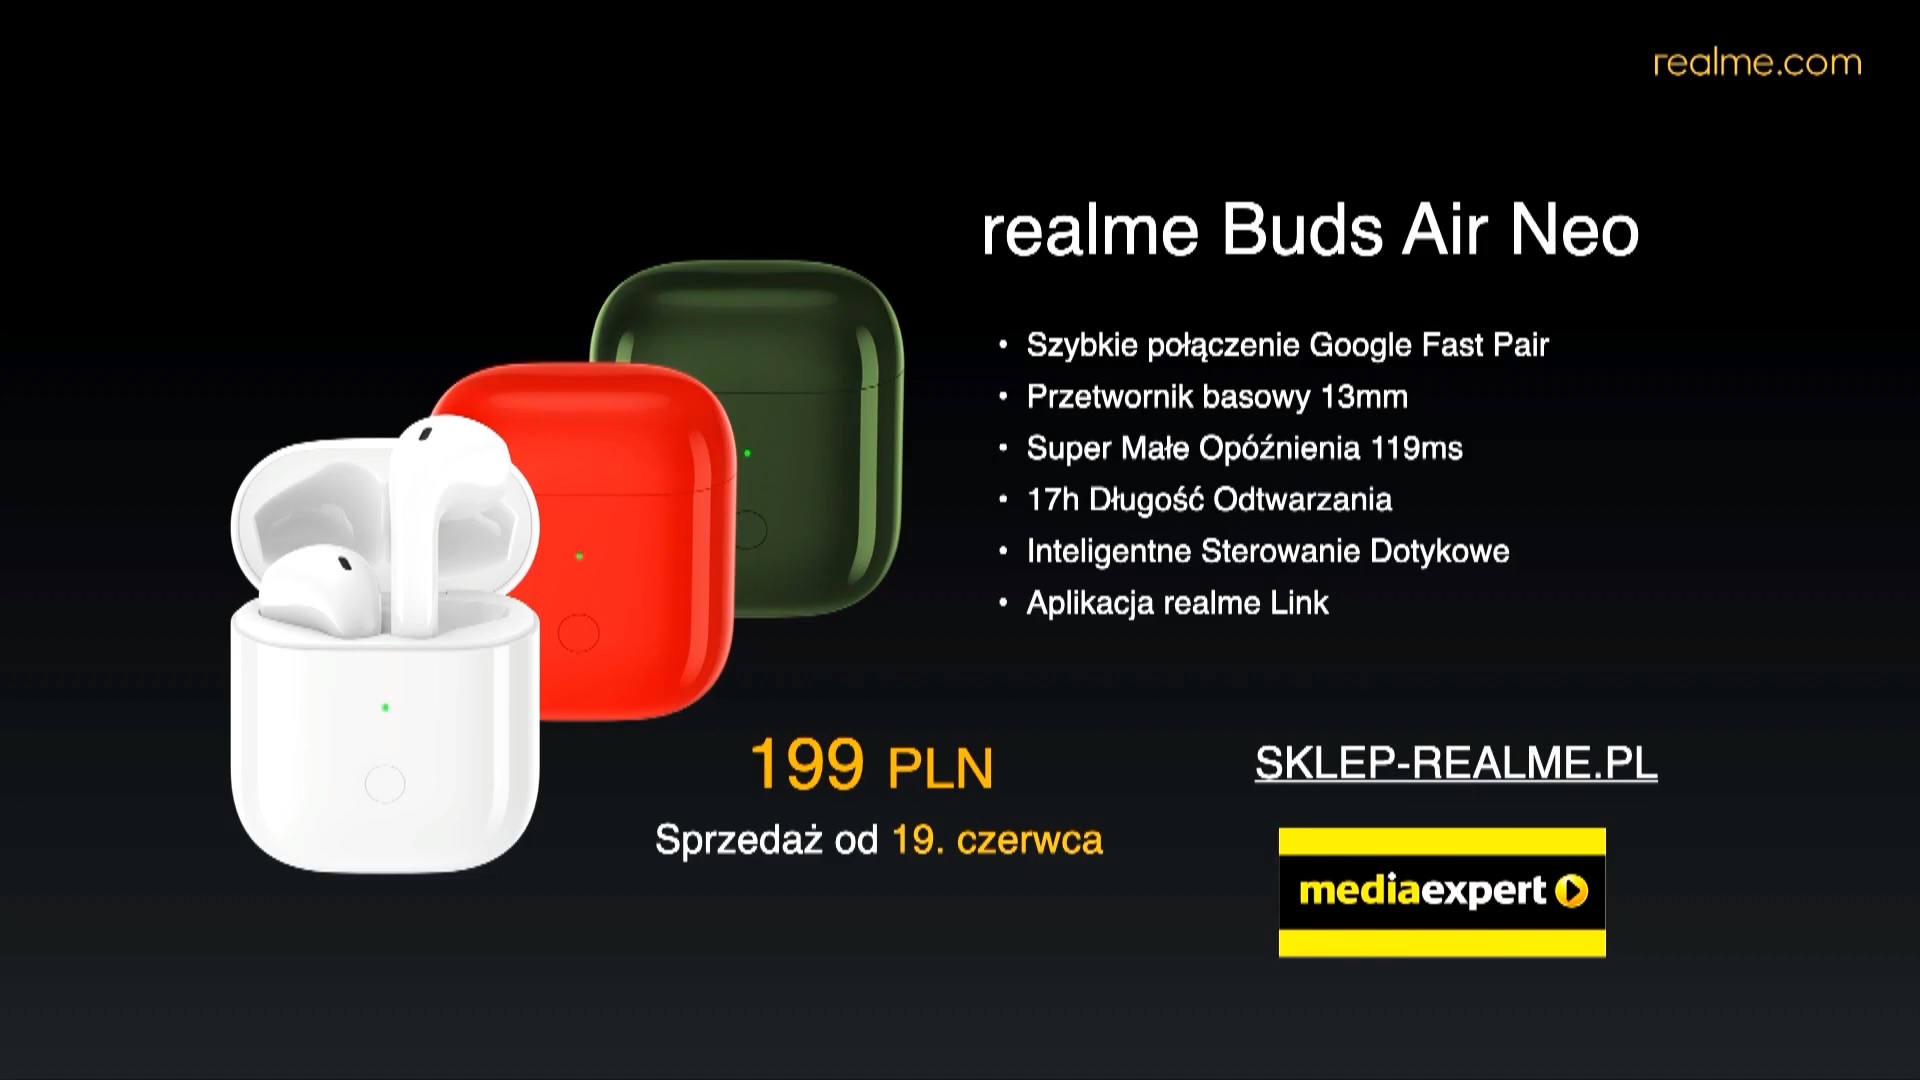 realme Buds Air Neo price Poland